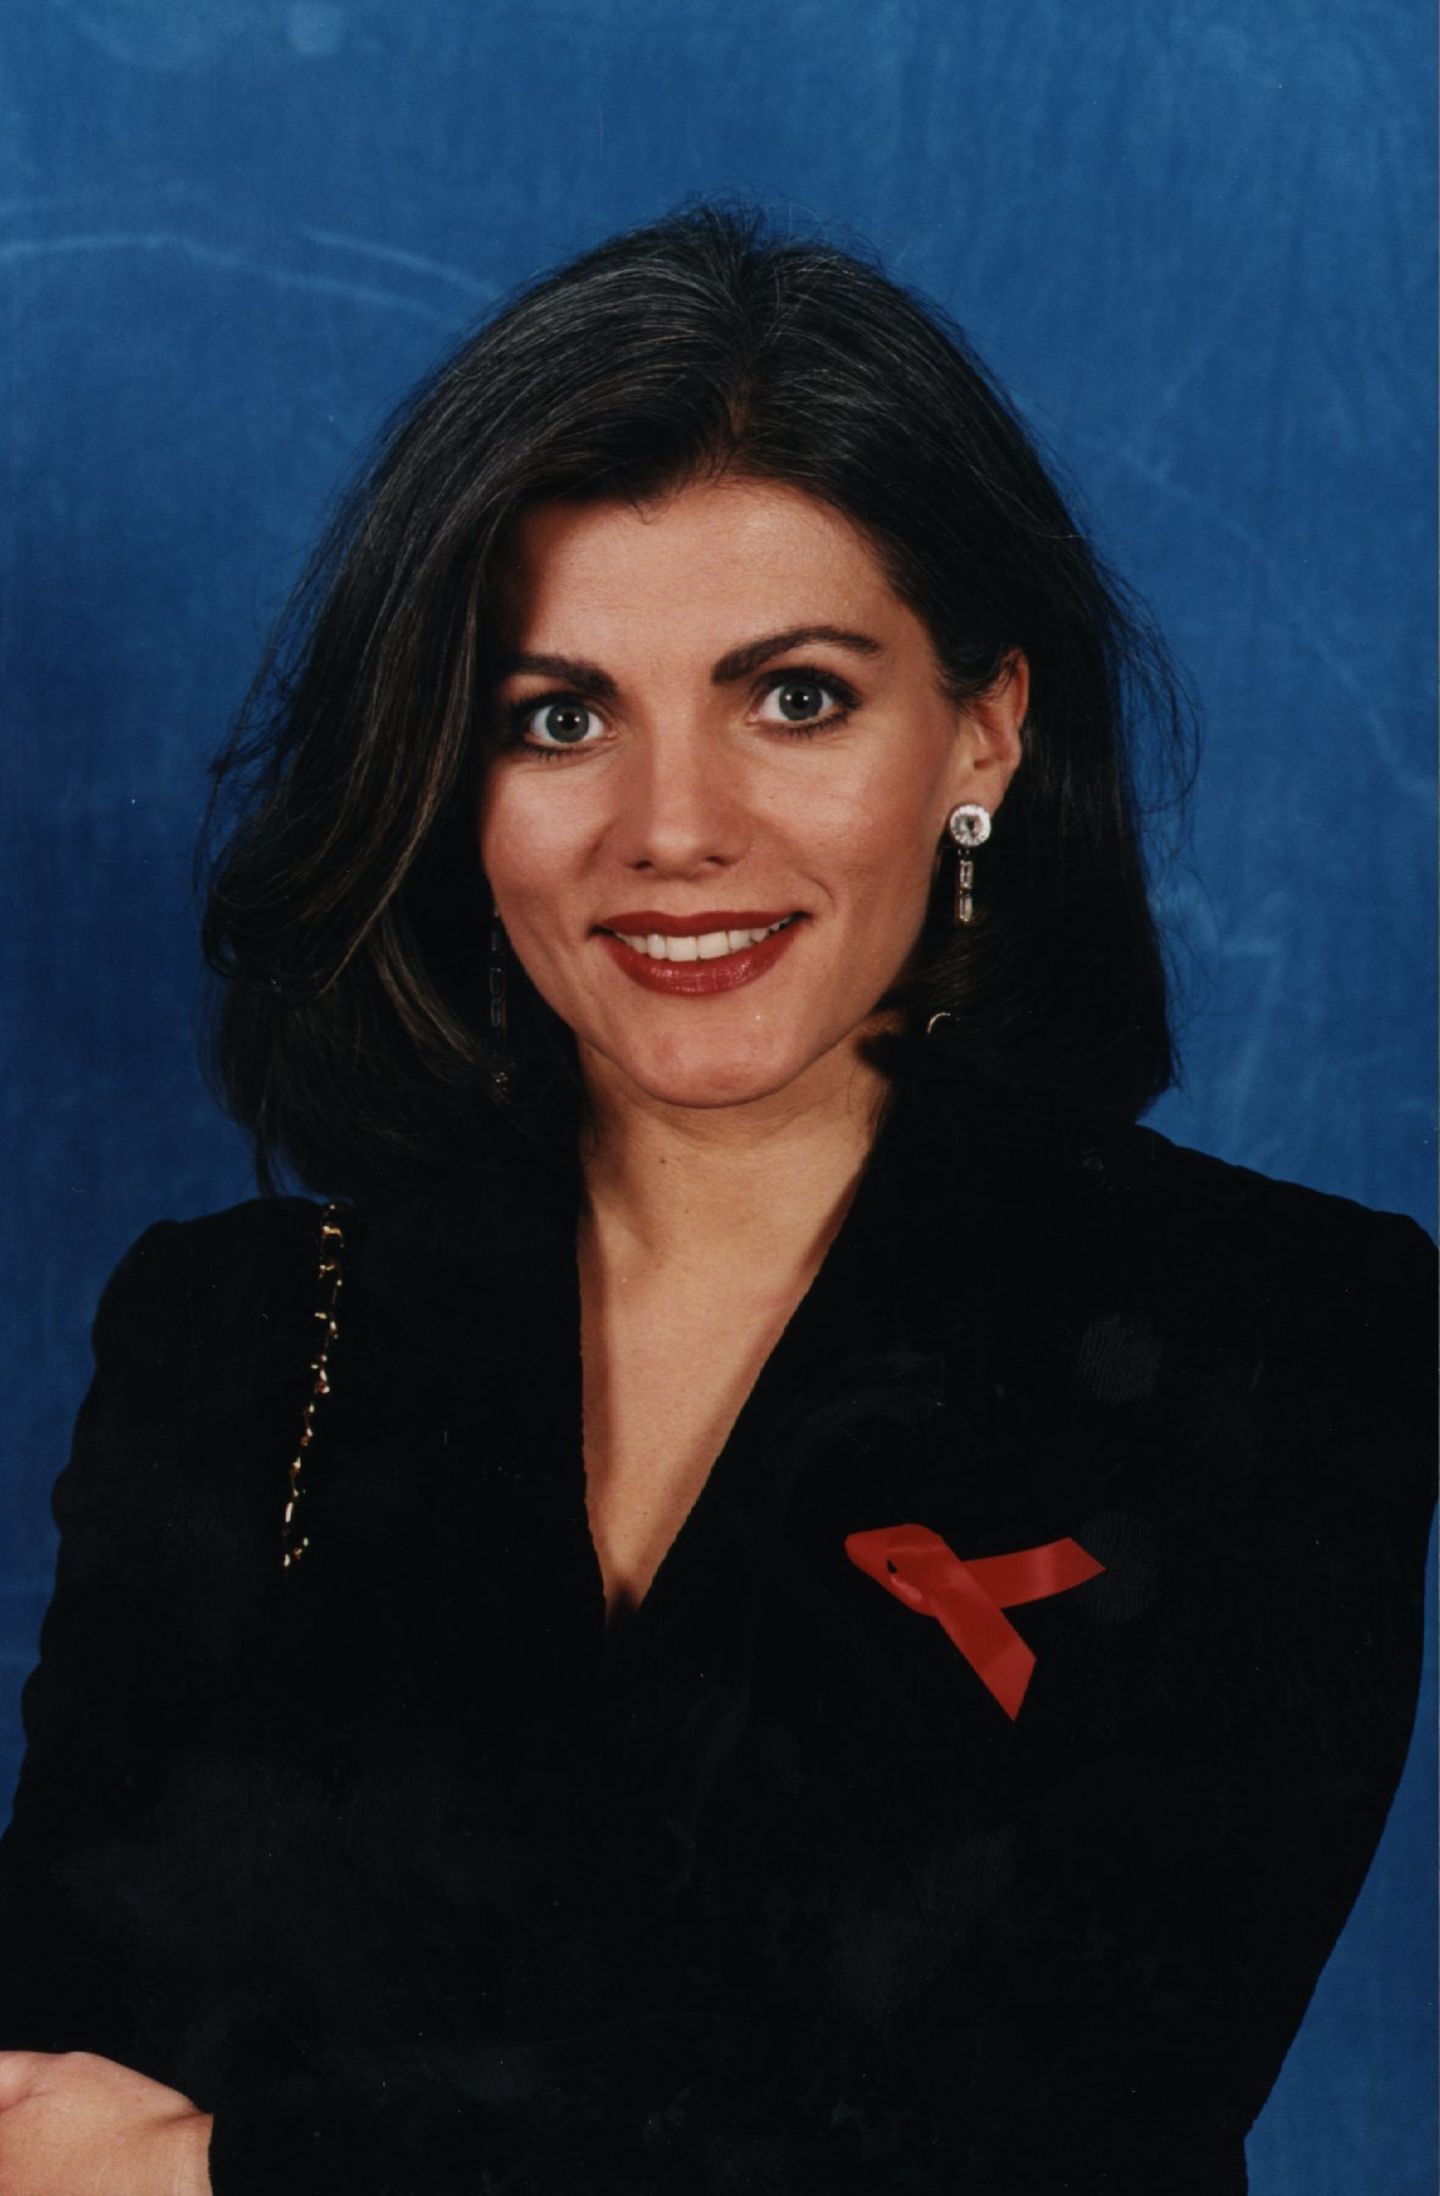 90er Moderatorinnen: Birgit Schrowange posiert